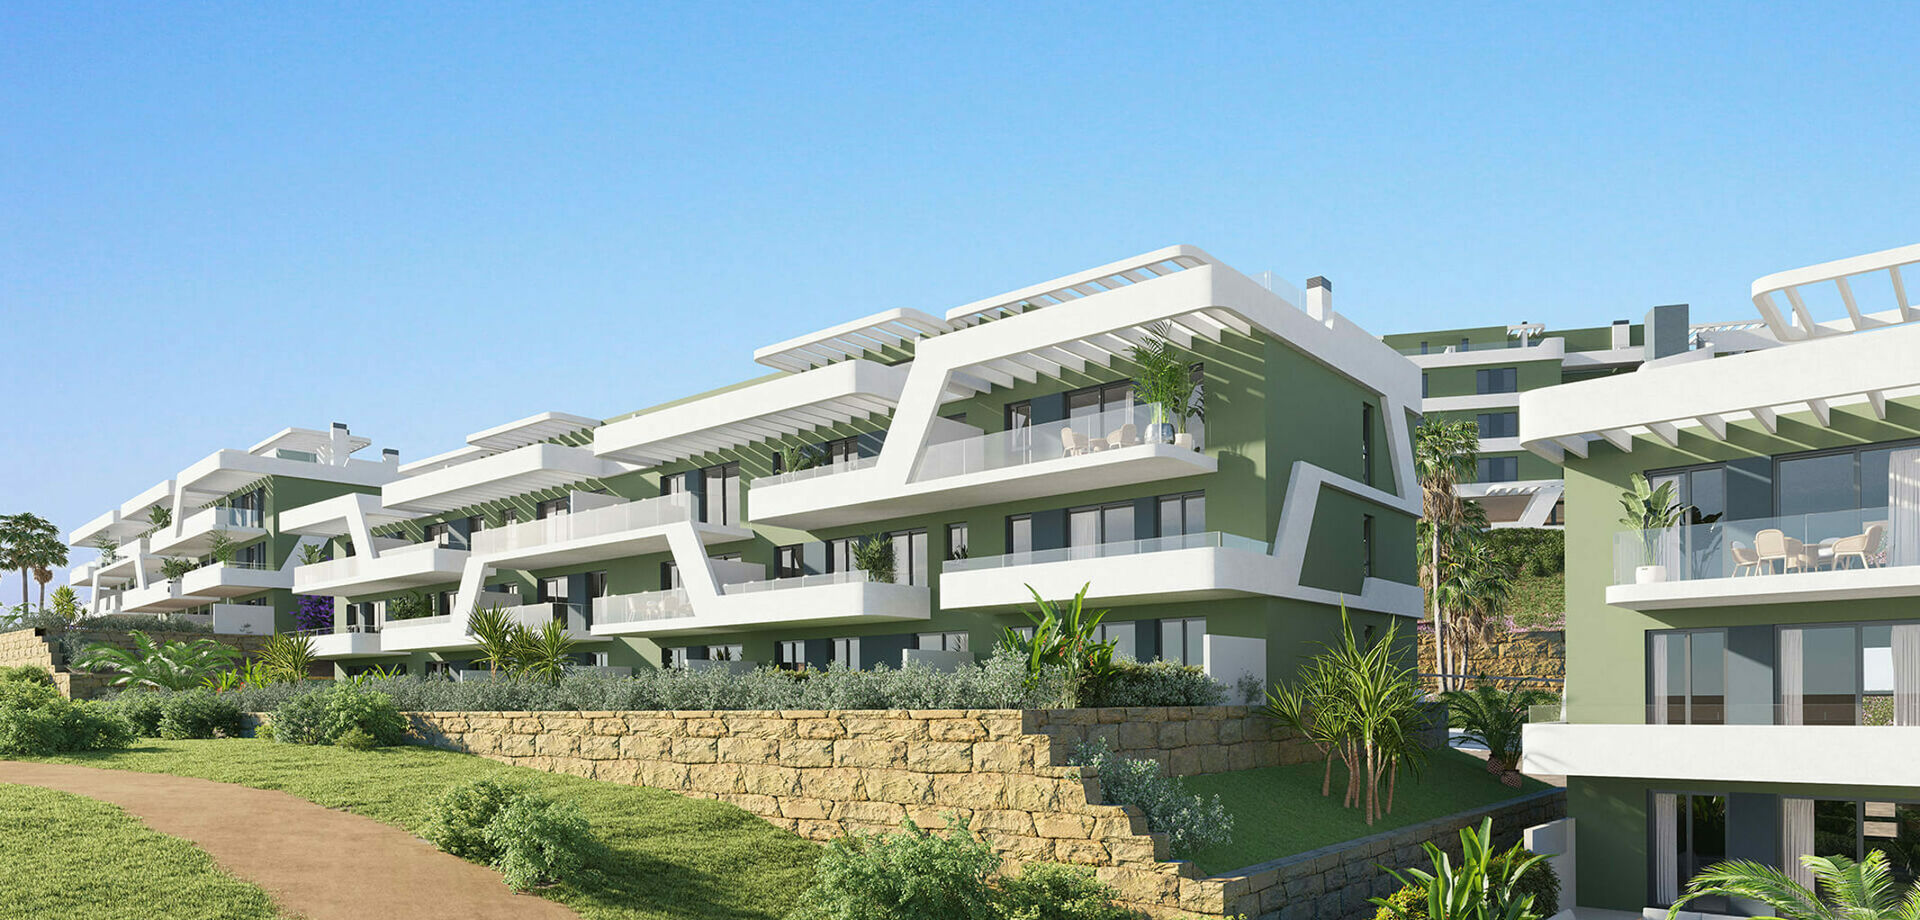 391 - Bahia - Modern Apartments in Mijas à 